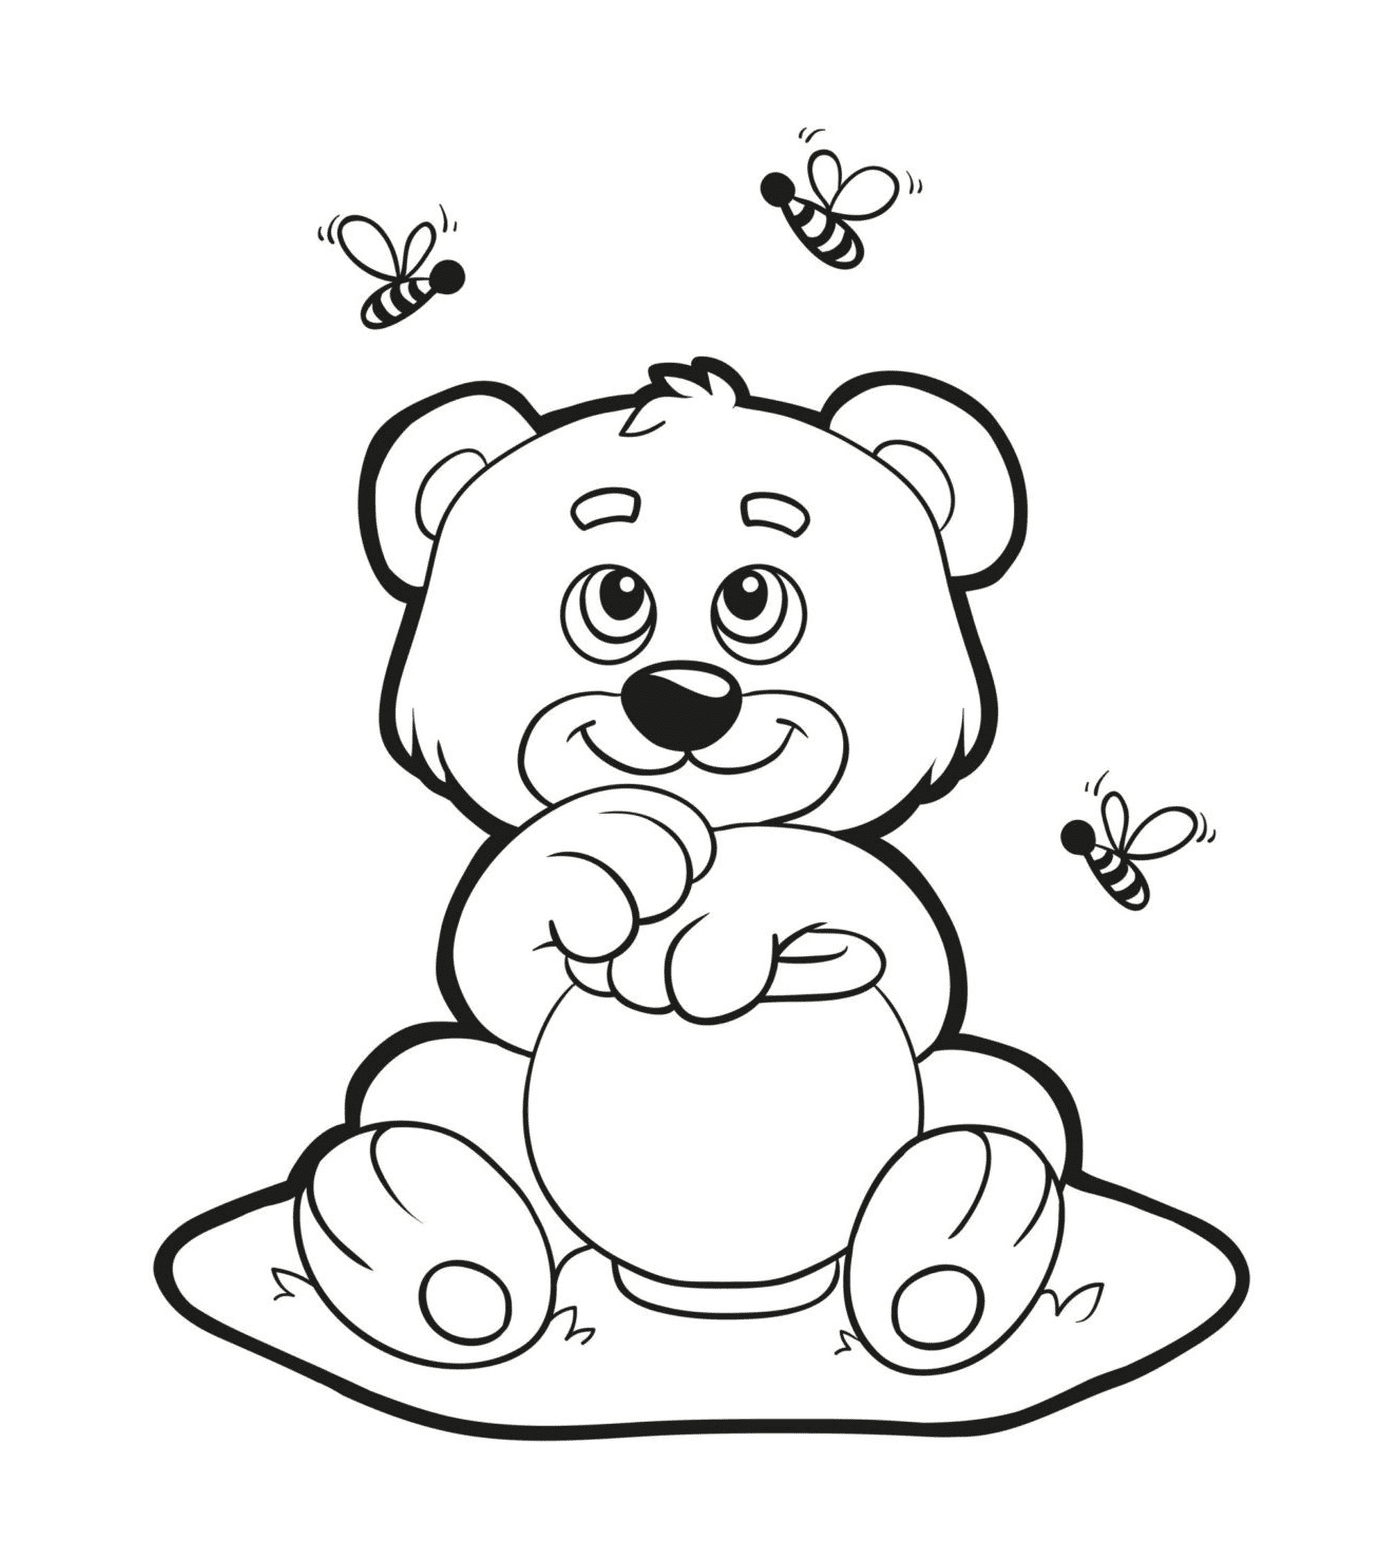  Bear Bear amante do mel 